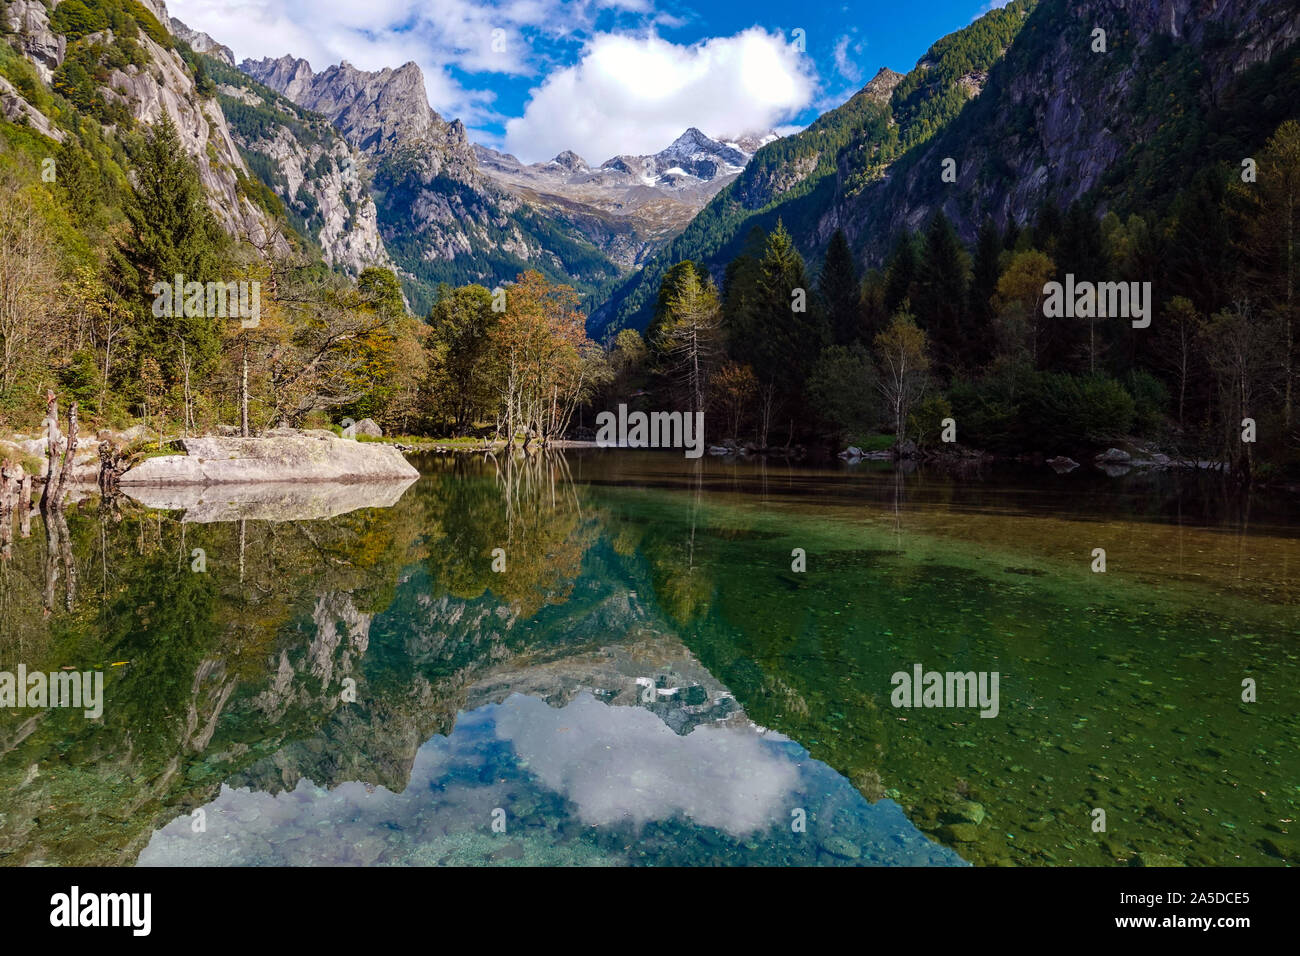 Petit lac avec des réflexions, Val Masino, Mello, Mello Vallée, Sondrio, Alpes italiennes, l'Italie, Sam Martino Banque D'Images